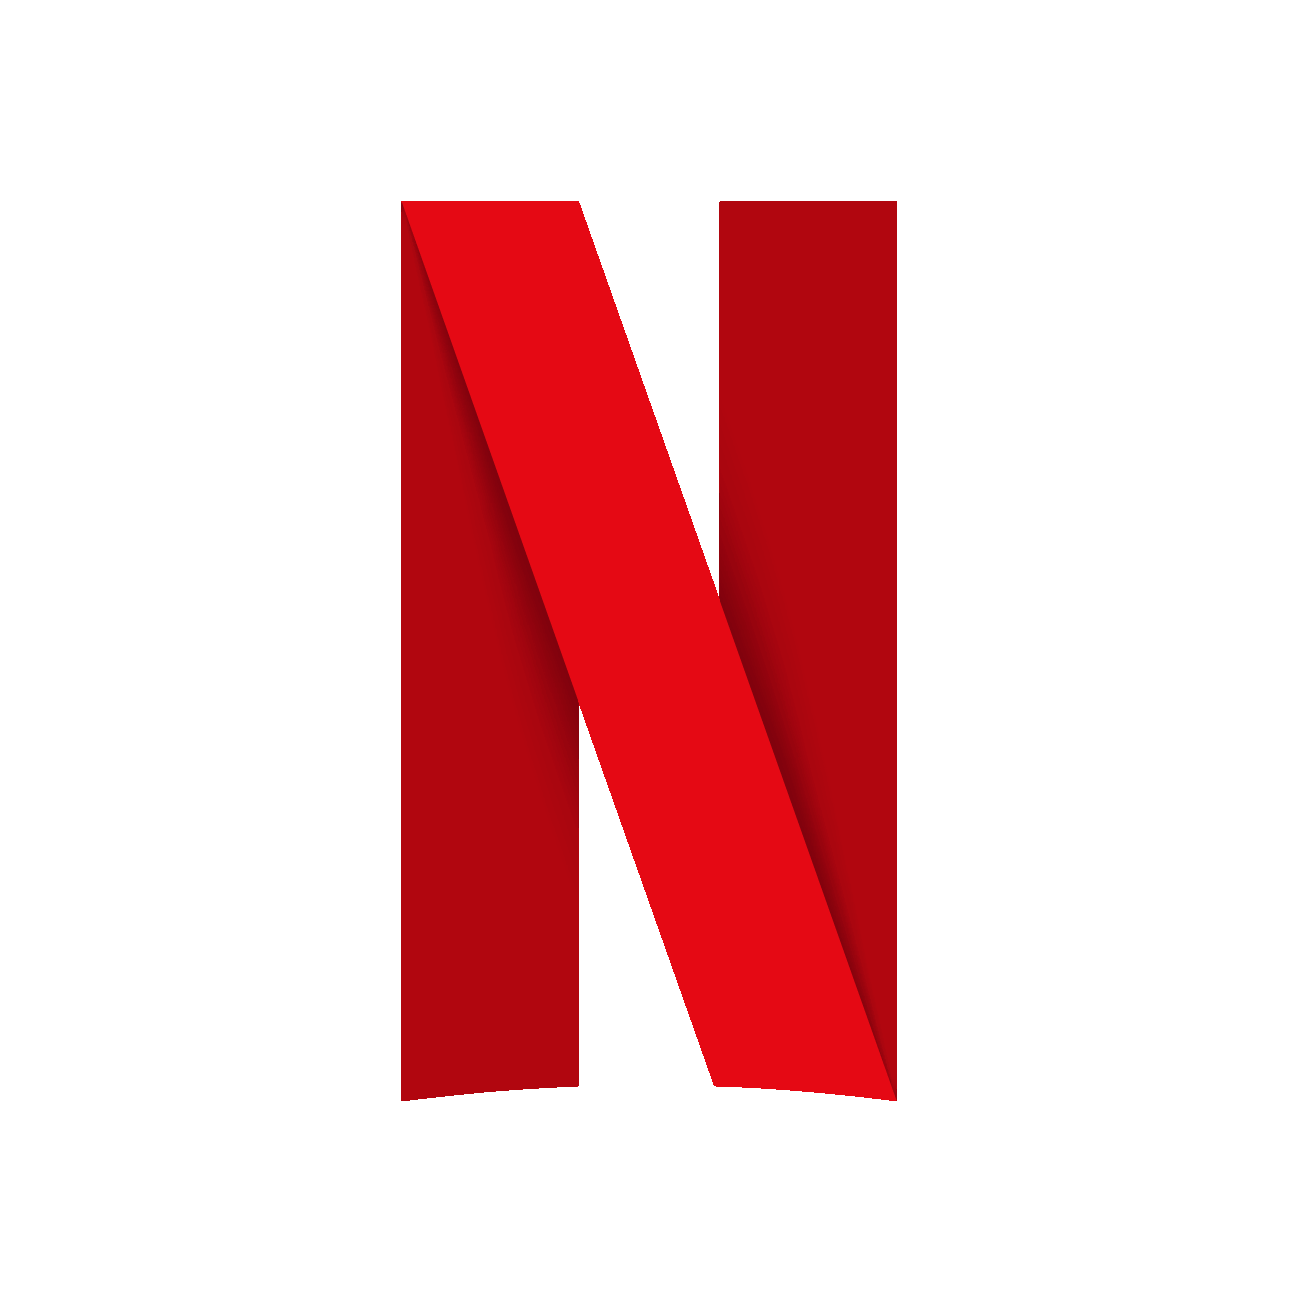 Netflix Logo Png - Free Transparent PNG Logos